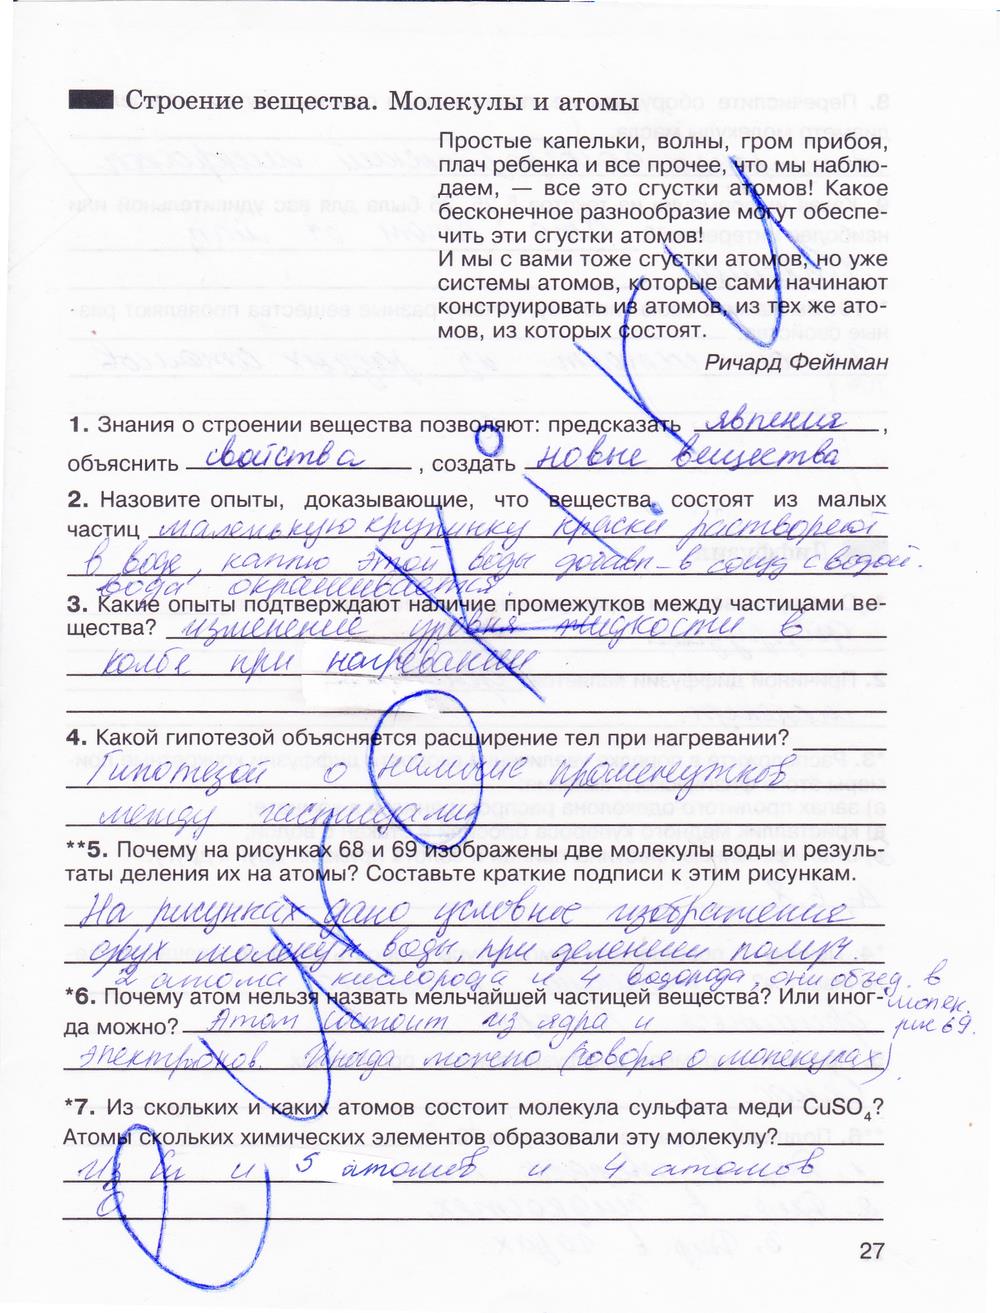 гдз 7 класс рабочая тетрадь страница 27 физика Мартынова, Бовин, Коротаев